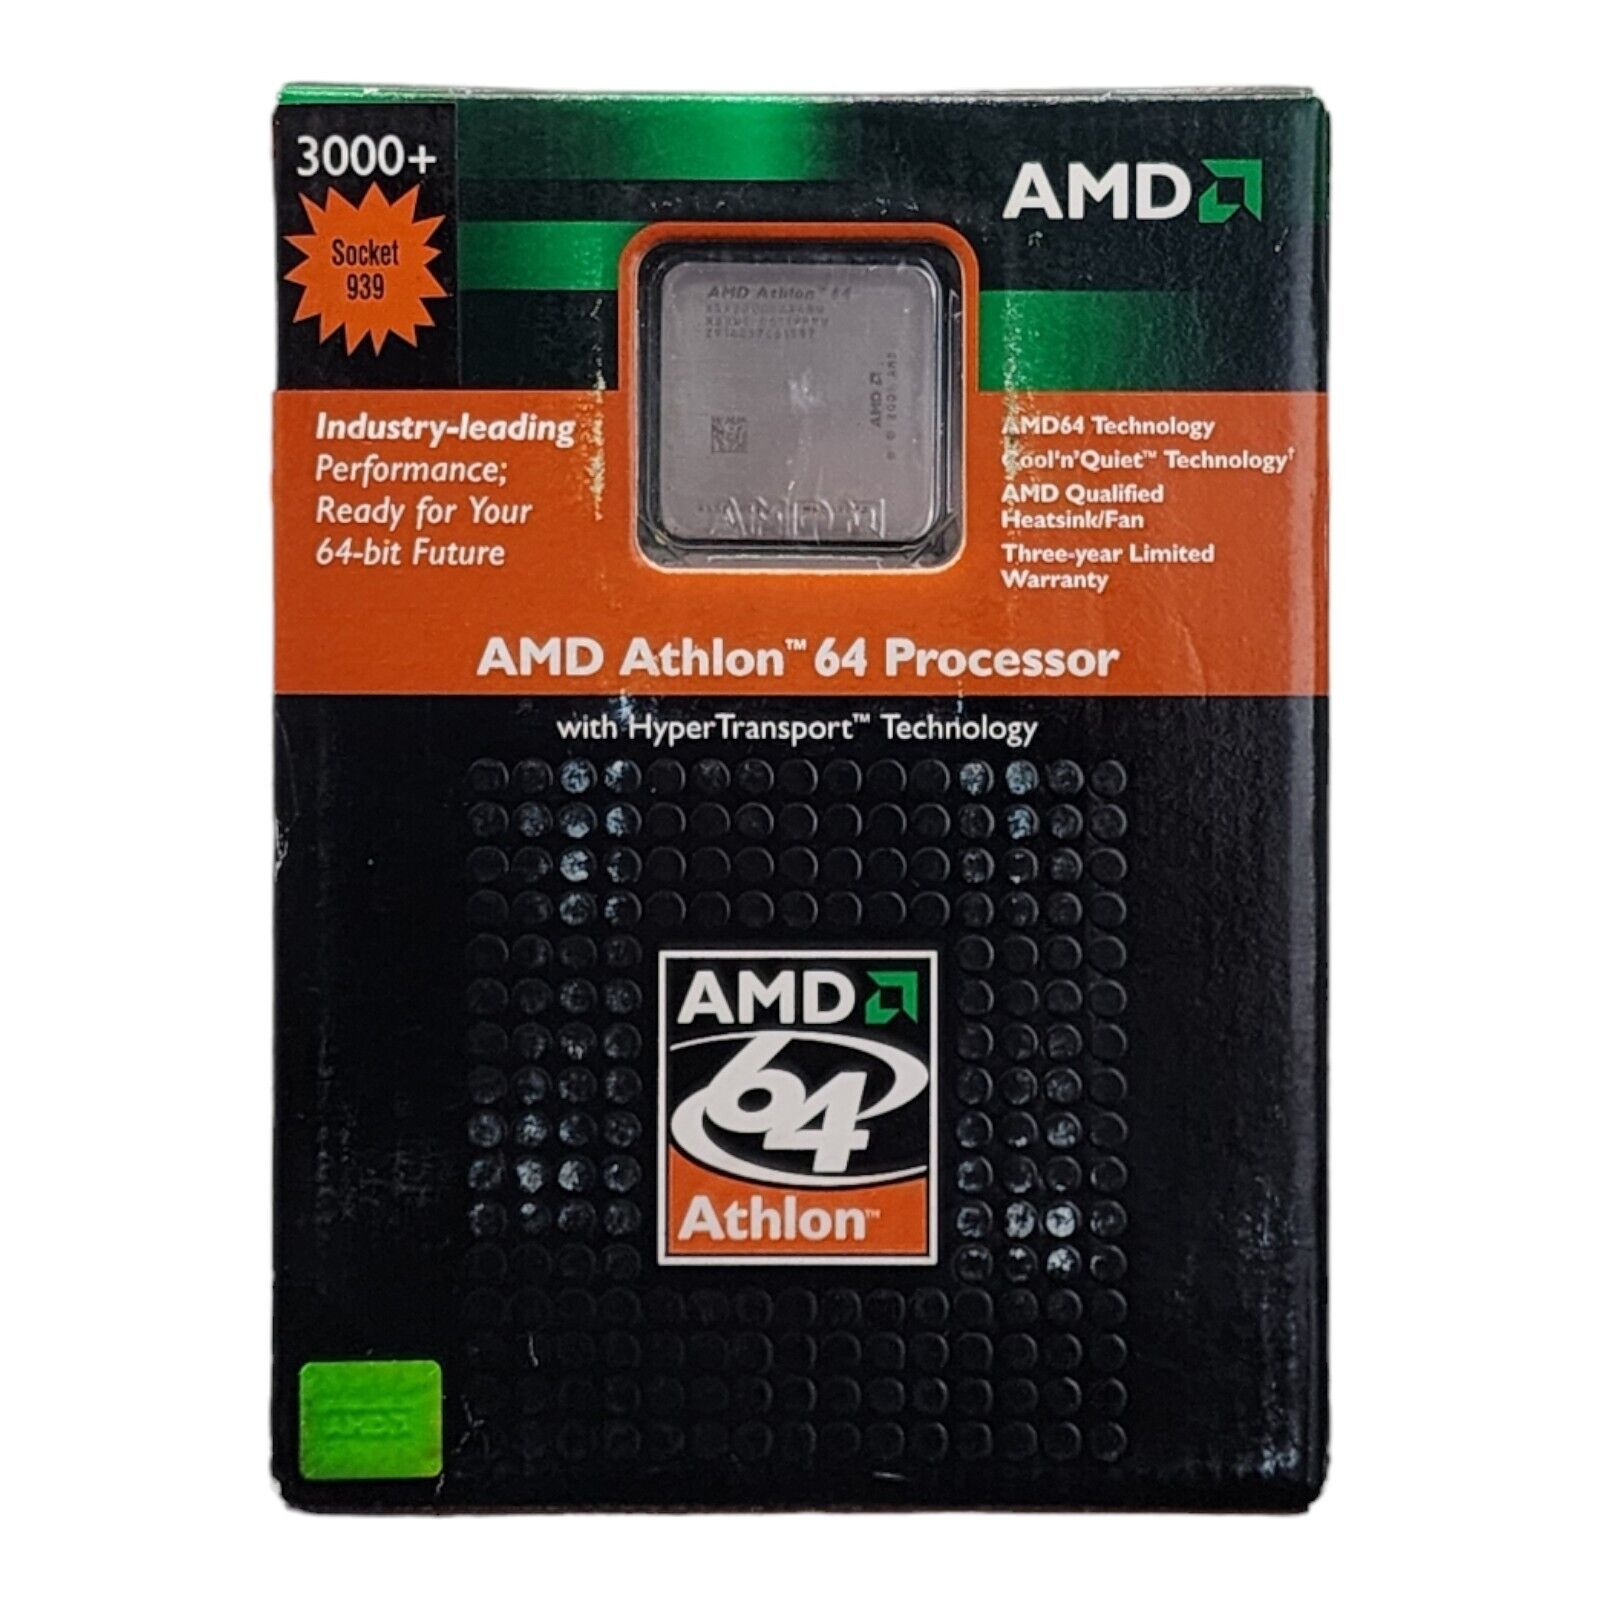 AMD ATHLON 3000+ 64BIT SOCKET 939 B PROCESSOR 939 HyperTransport Technology 